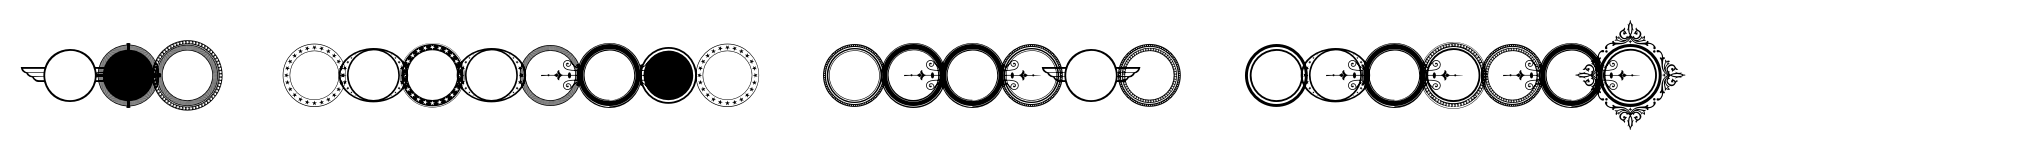 LHF Monogram Circle Borders image